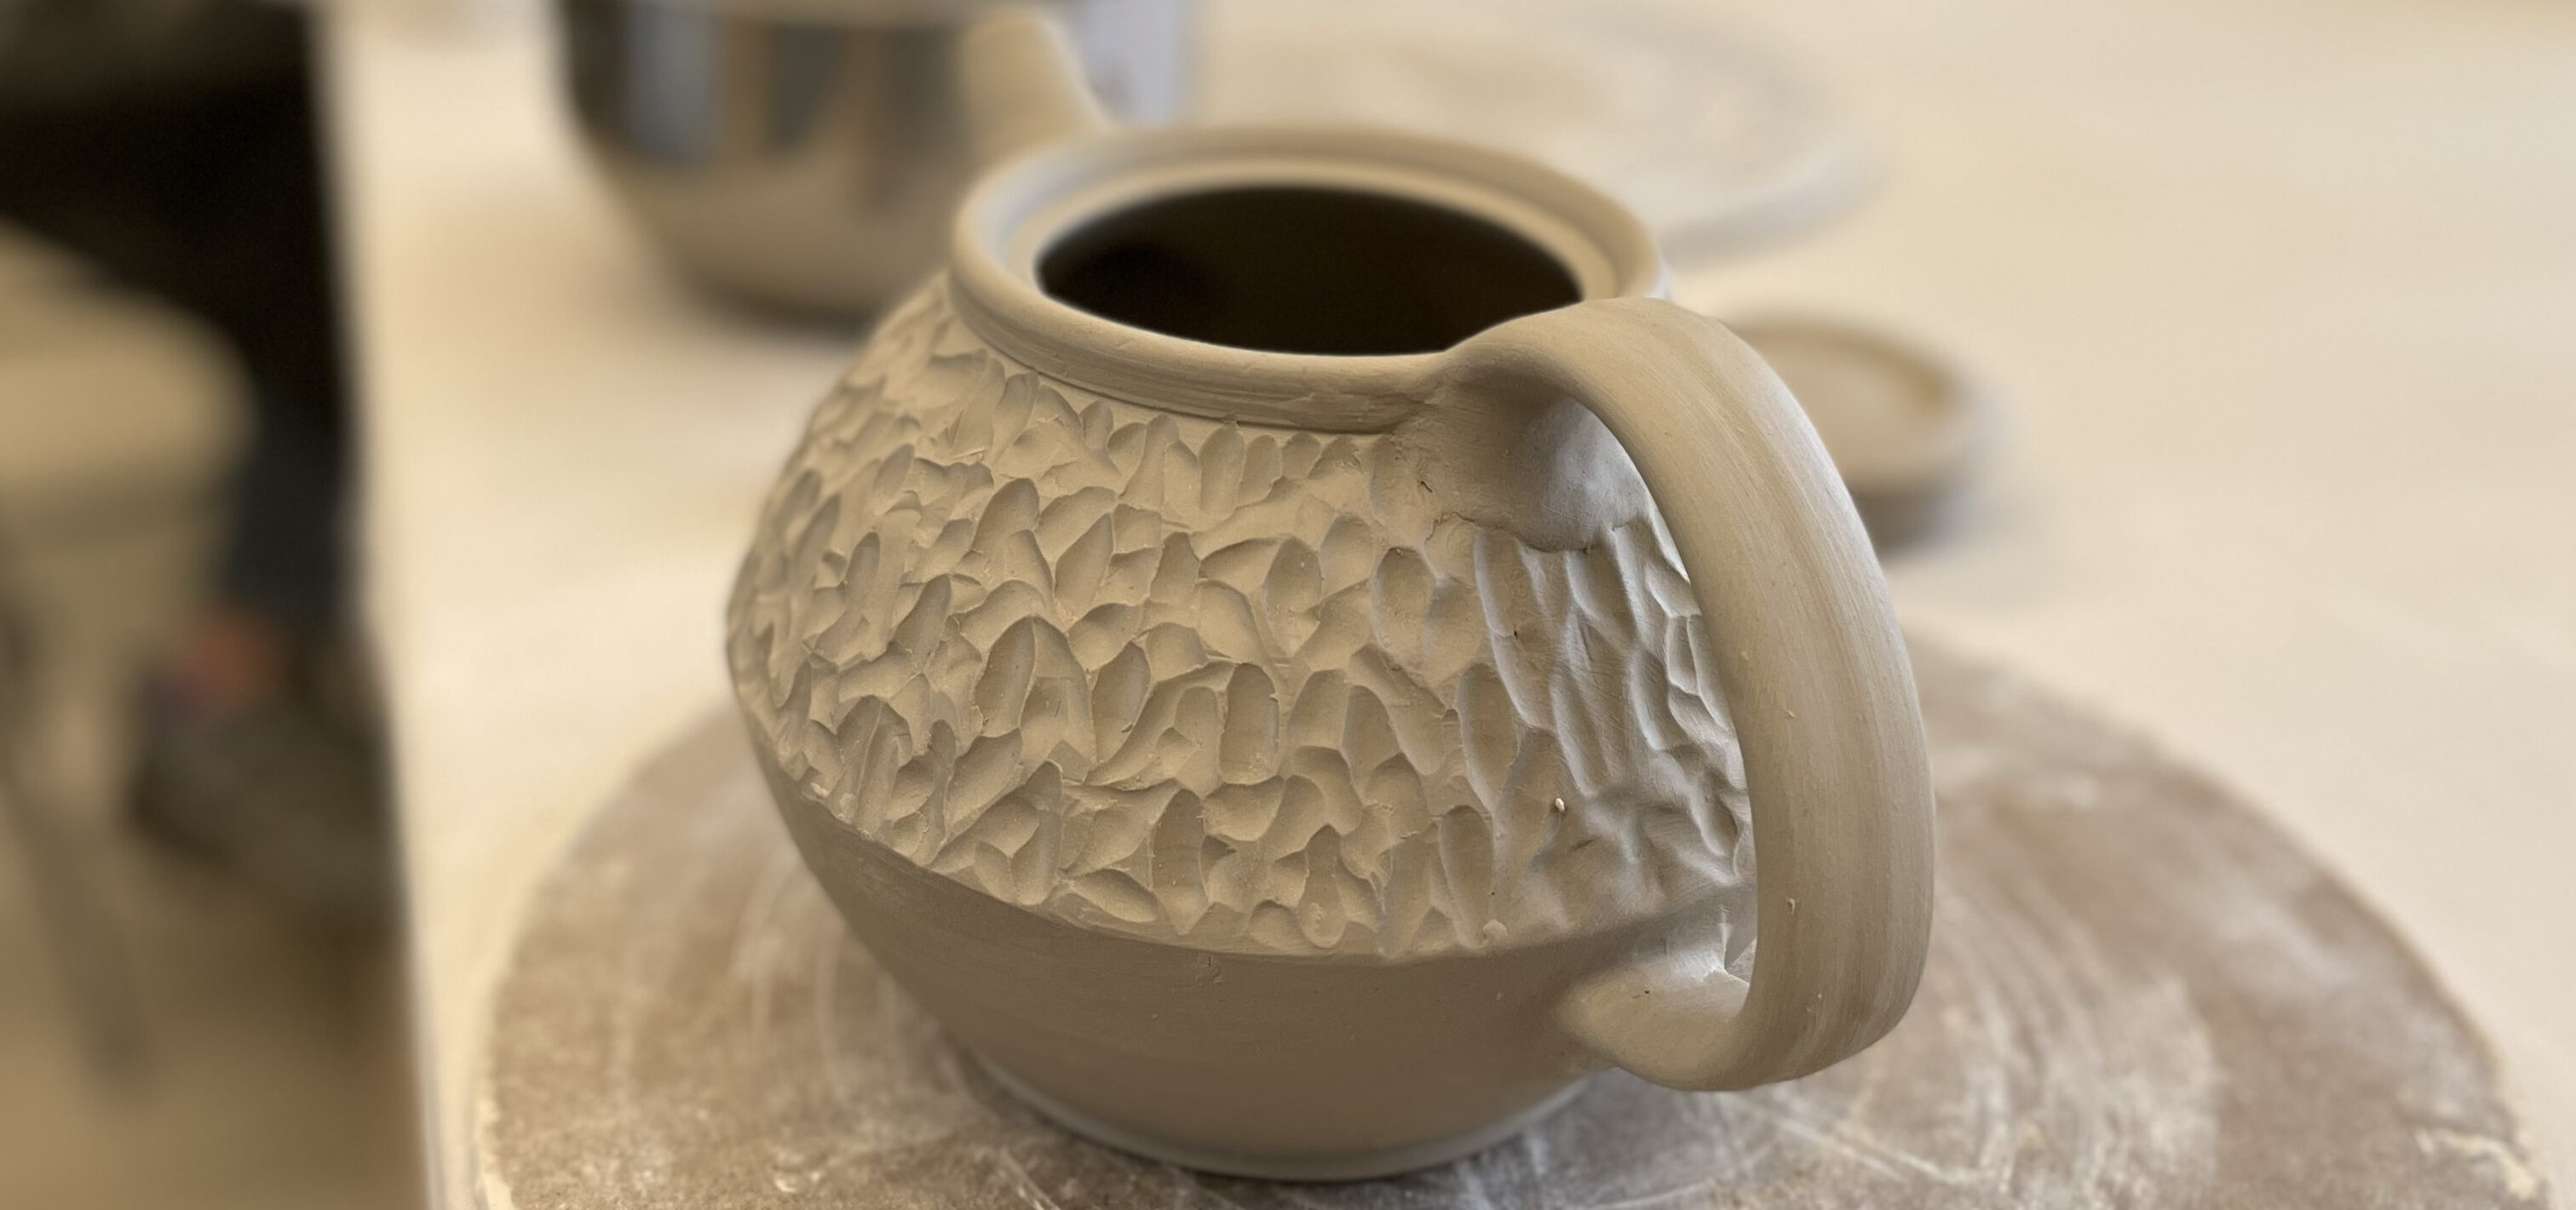 Paint Your Own: Porcelain Vases - Hub Hobby